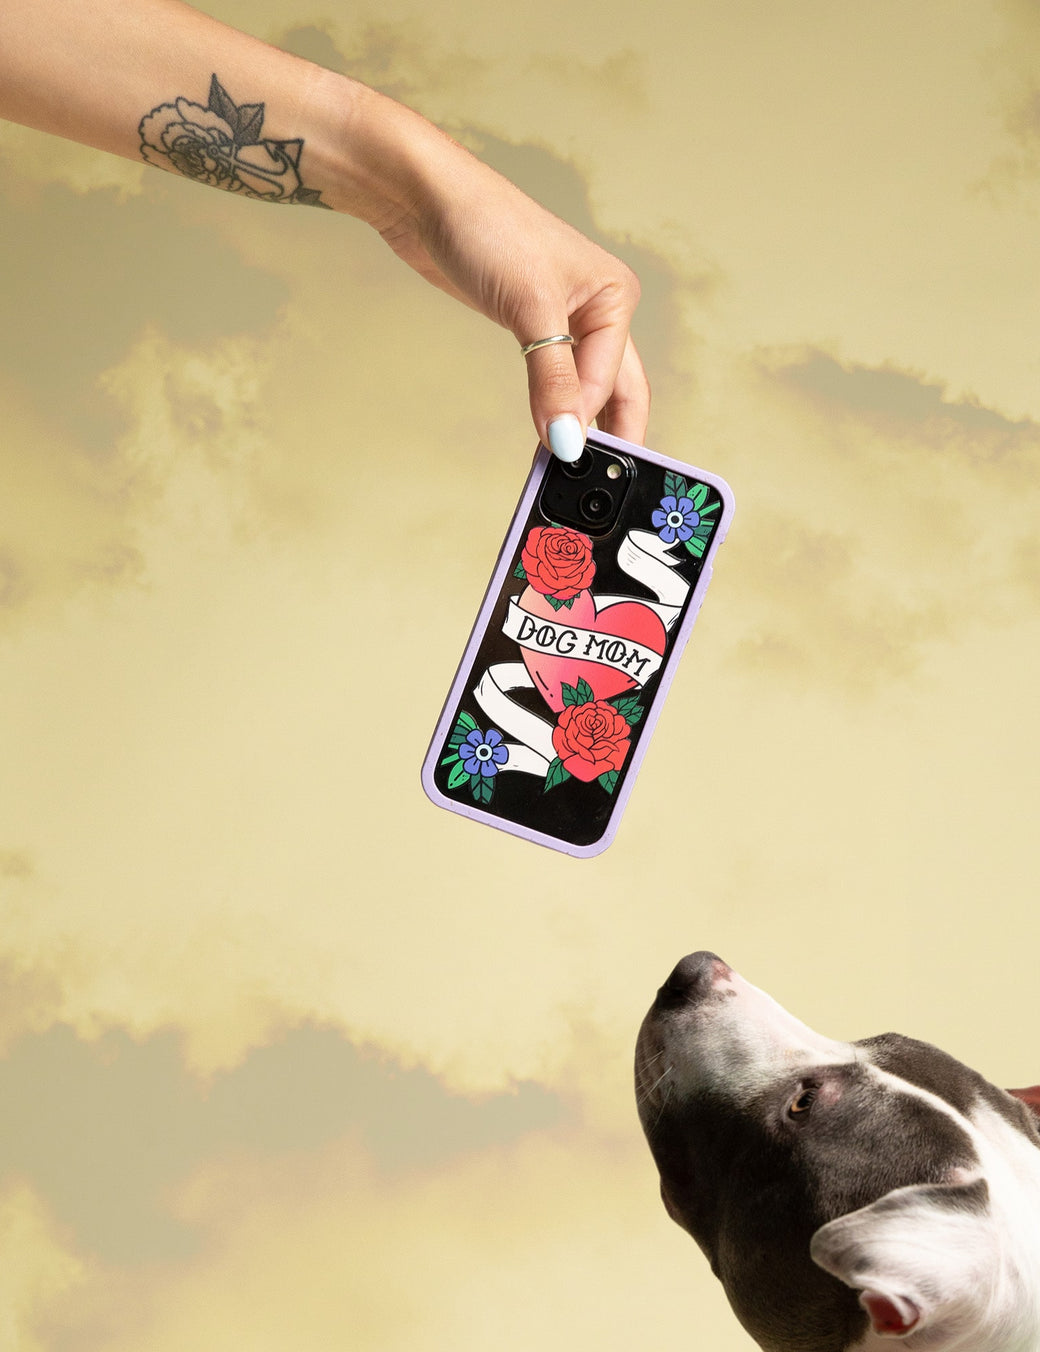 Clear Dog Mom iPhone 12 Mini Case With Lavender Ridge